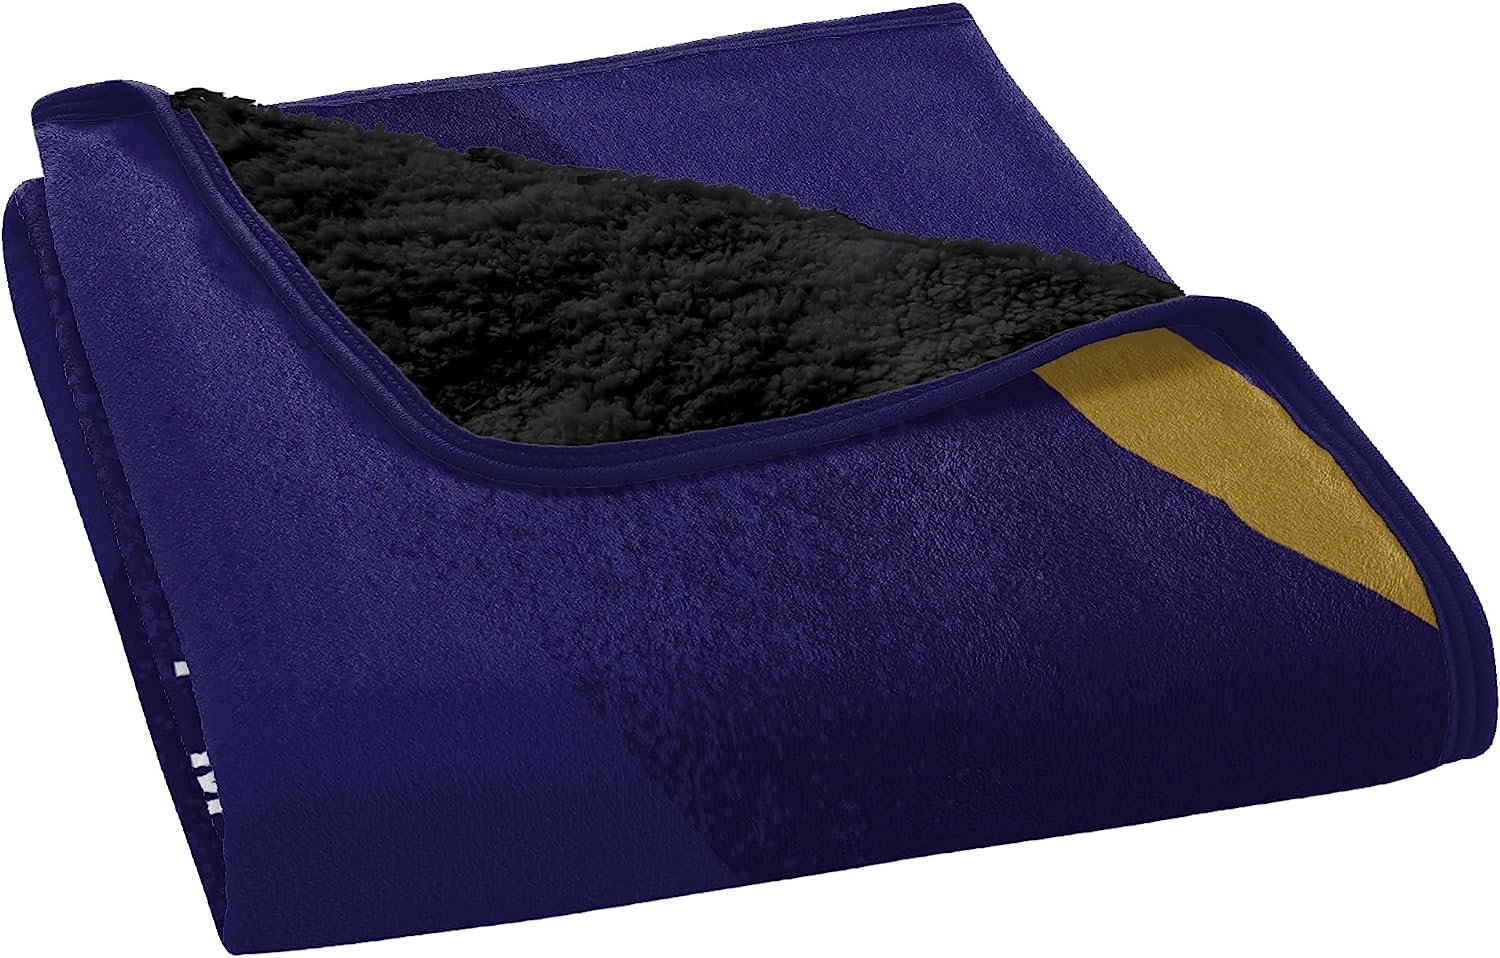 Baltimore Ravens Throw Blanket, Sherpa Raschel Polyester, Silk Touch Style, Velocity Design, 50x60 Inch